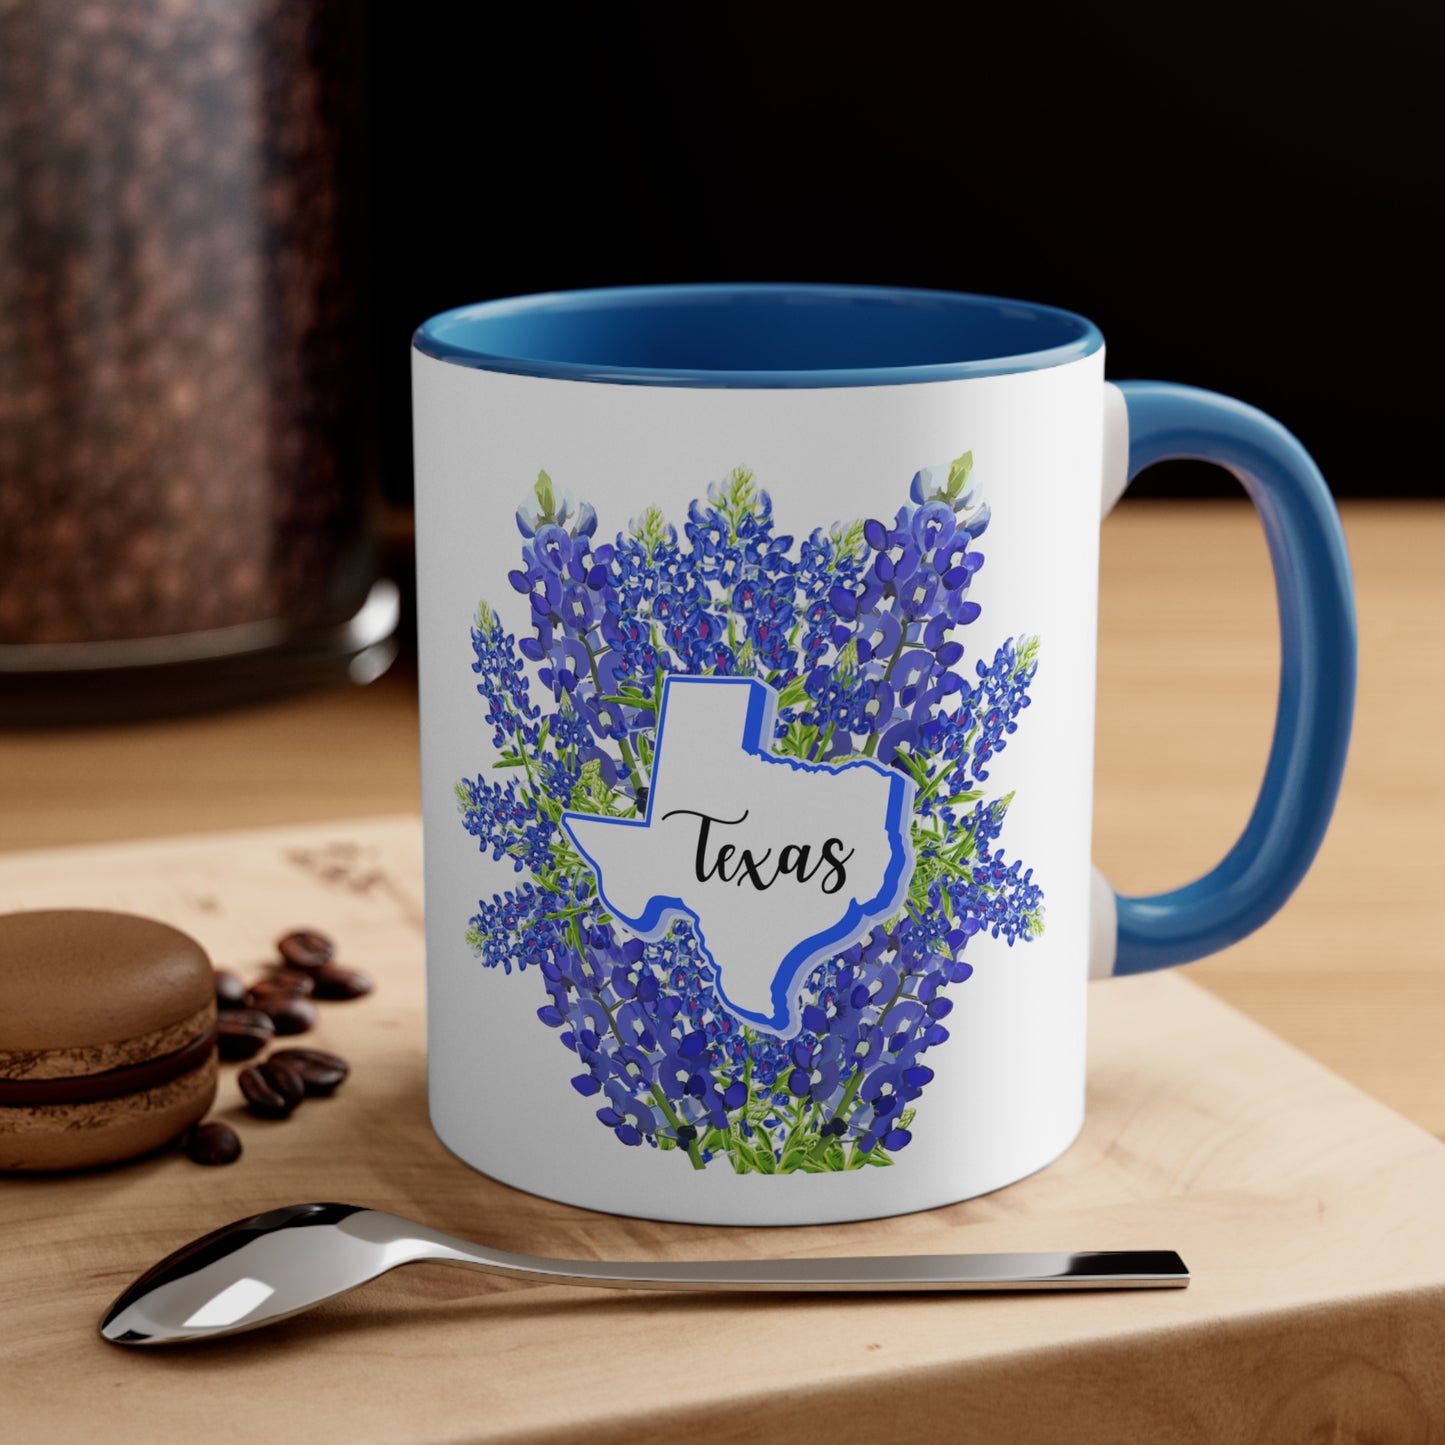 Texas Bluebonnet Coffee Mug, 11oz, Texas Bluebonnets, Texas Coffee Mug With Bluebonnets, Gift For Her, Western Mug, Coffee Cup, Gift for Mom